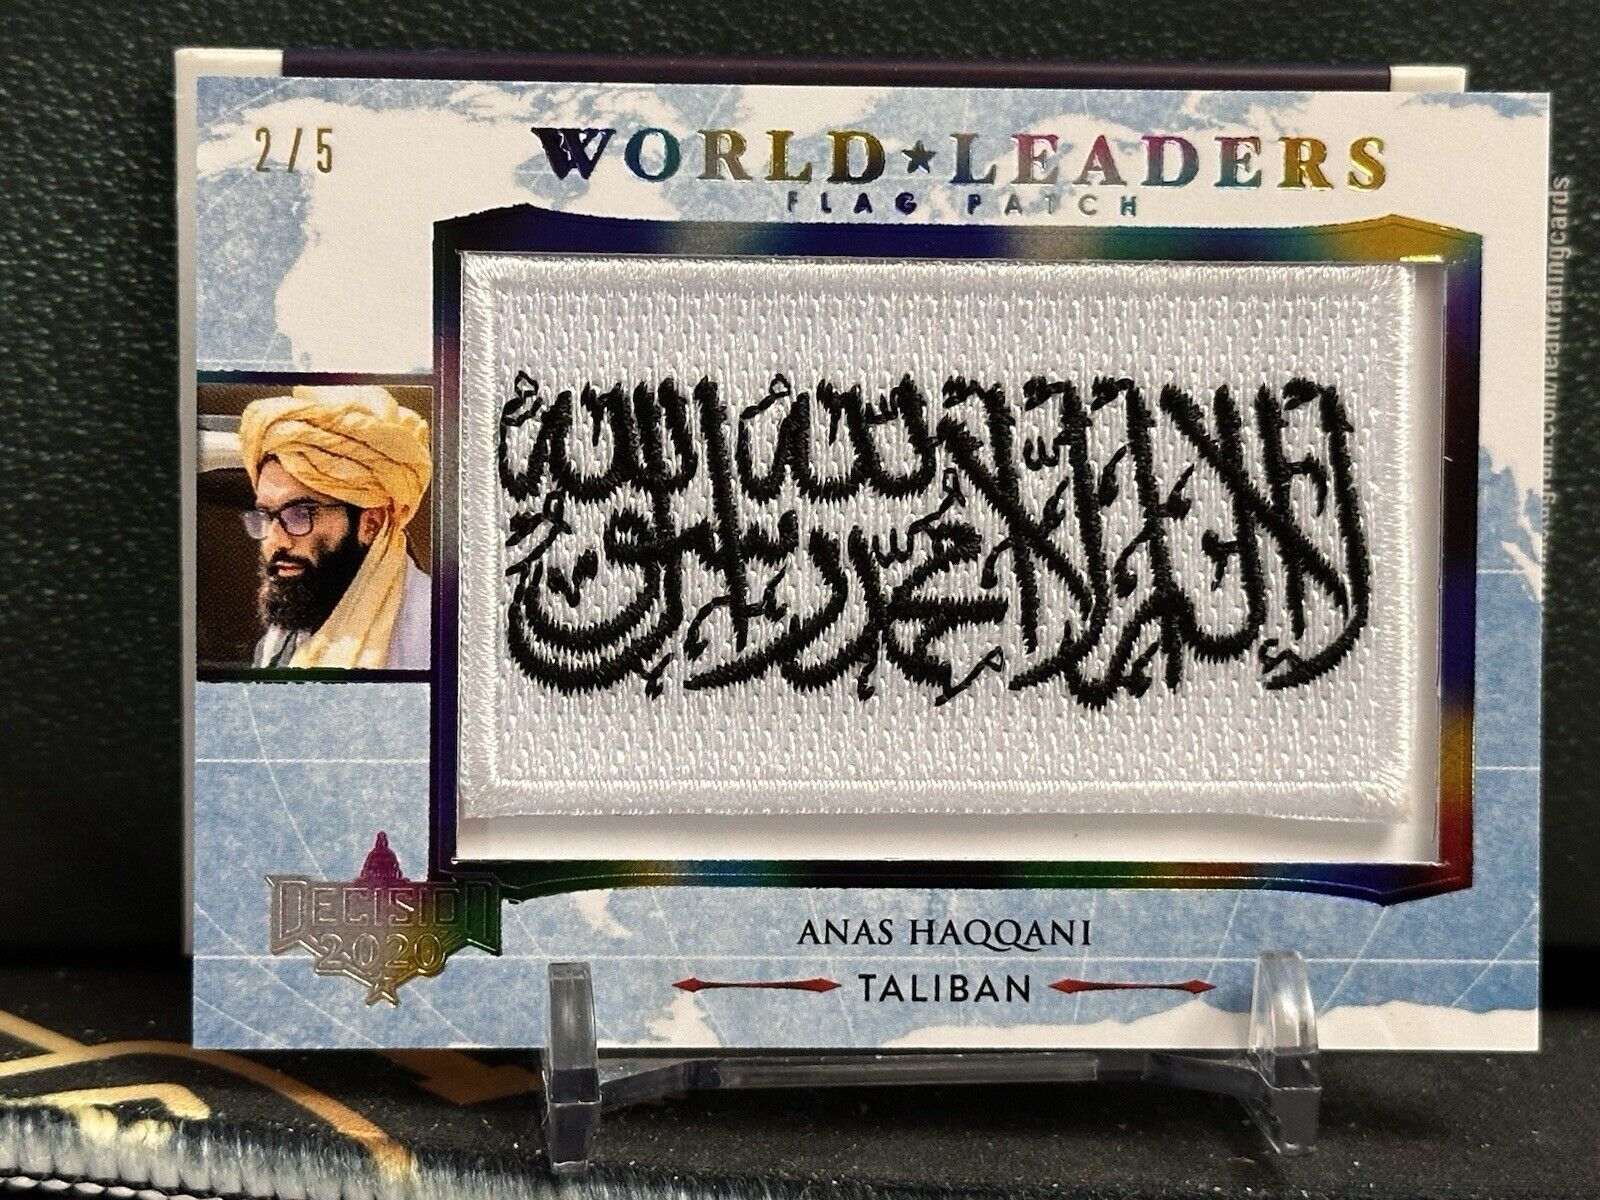 Anas Haqqani WL56 2022 Decision 2022 World Leaders Flag Patch Taliban Rainbow /5